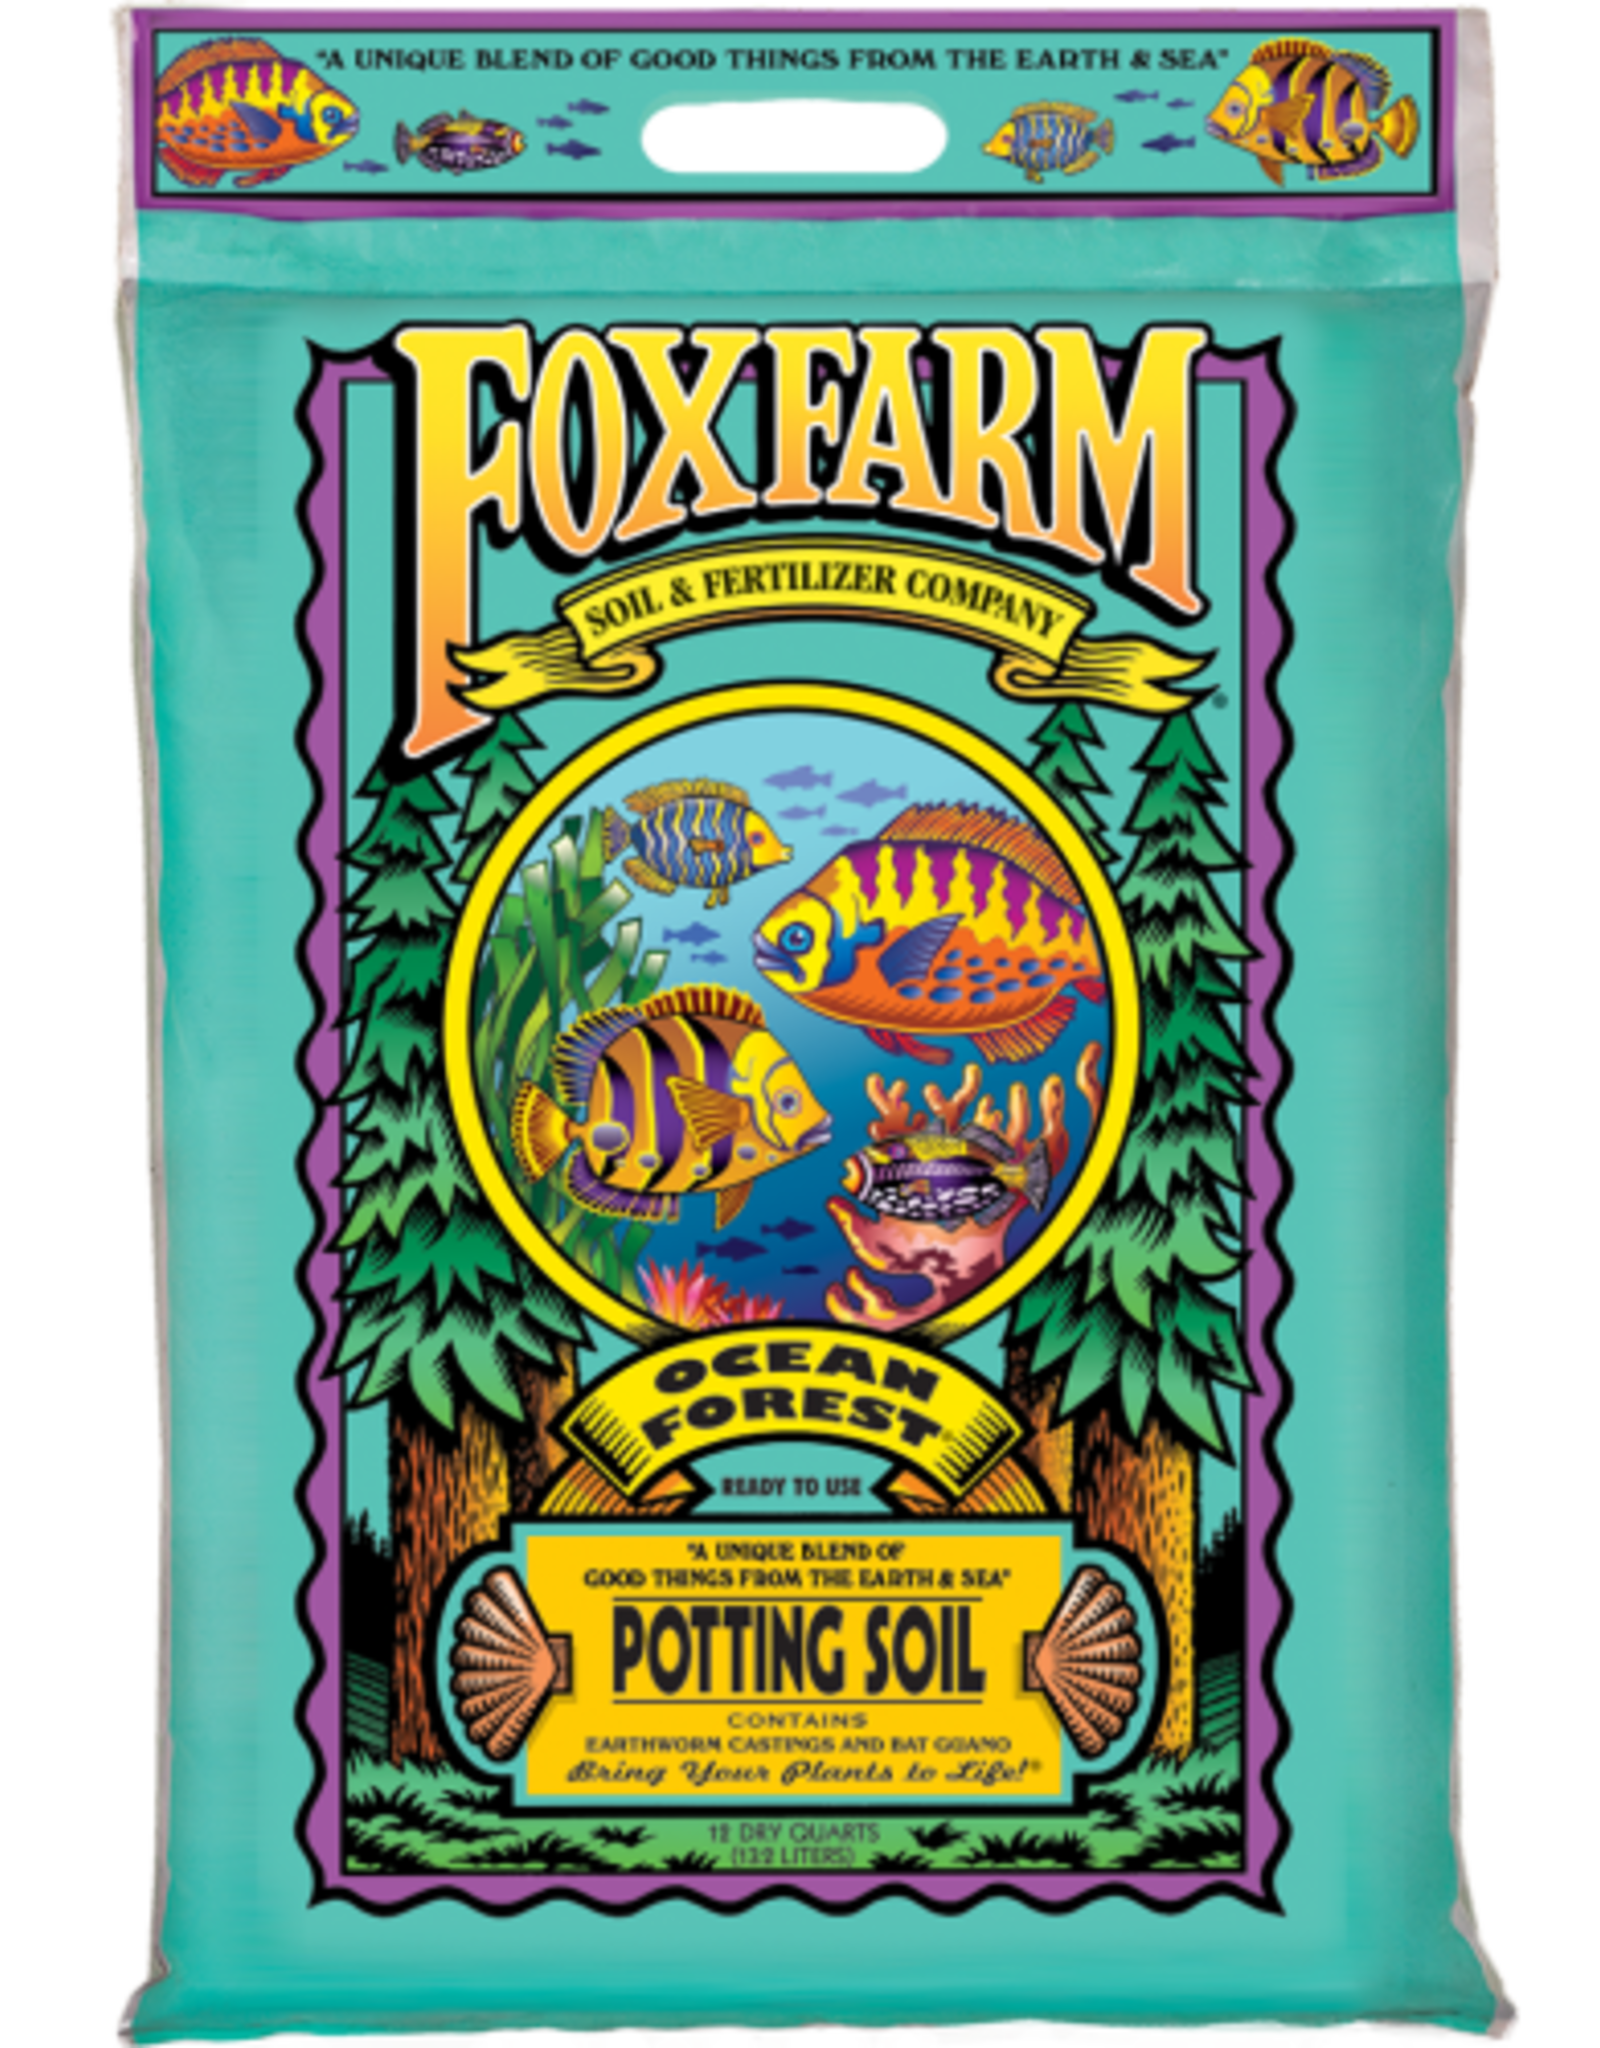 FOXFARM FOXFARM OCEAN FOREST POTTING SOIL 12QT